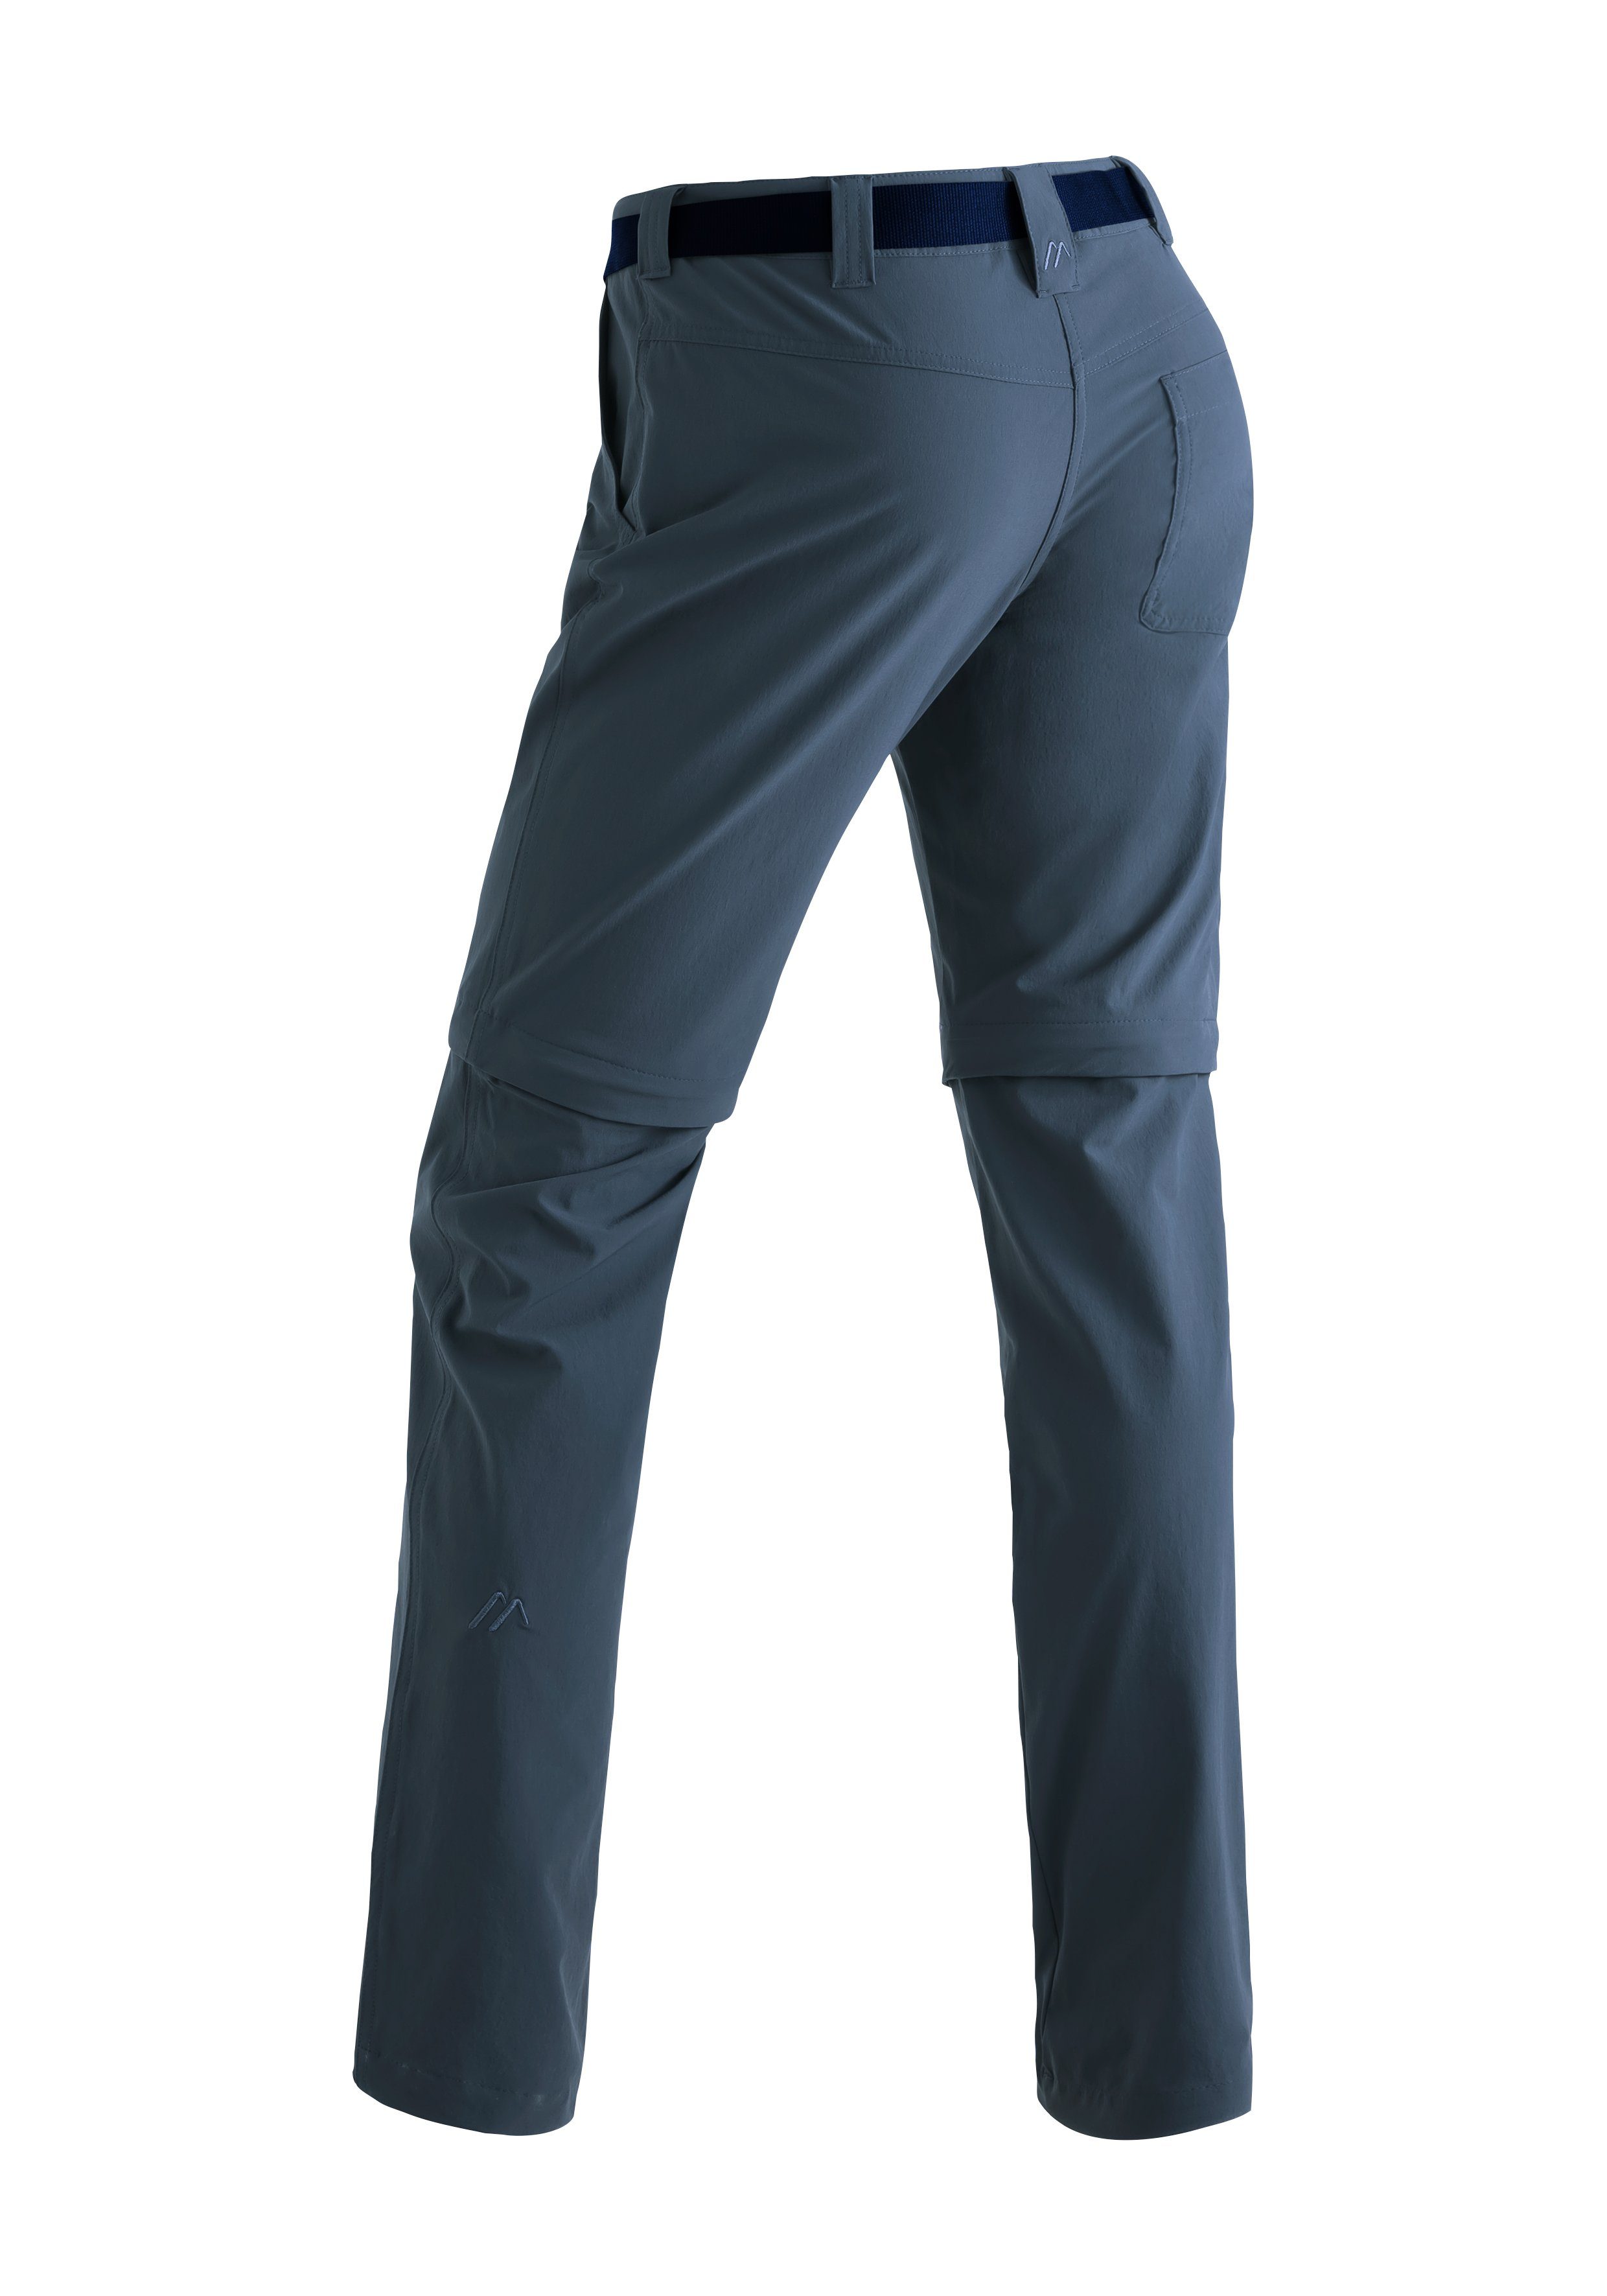 Inara zipp-off Sports jeansblau Maier Outdoor-Hose atmungsaktive slim Damen Wanderhose, Funktionshose zip